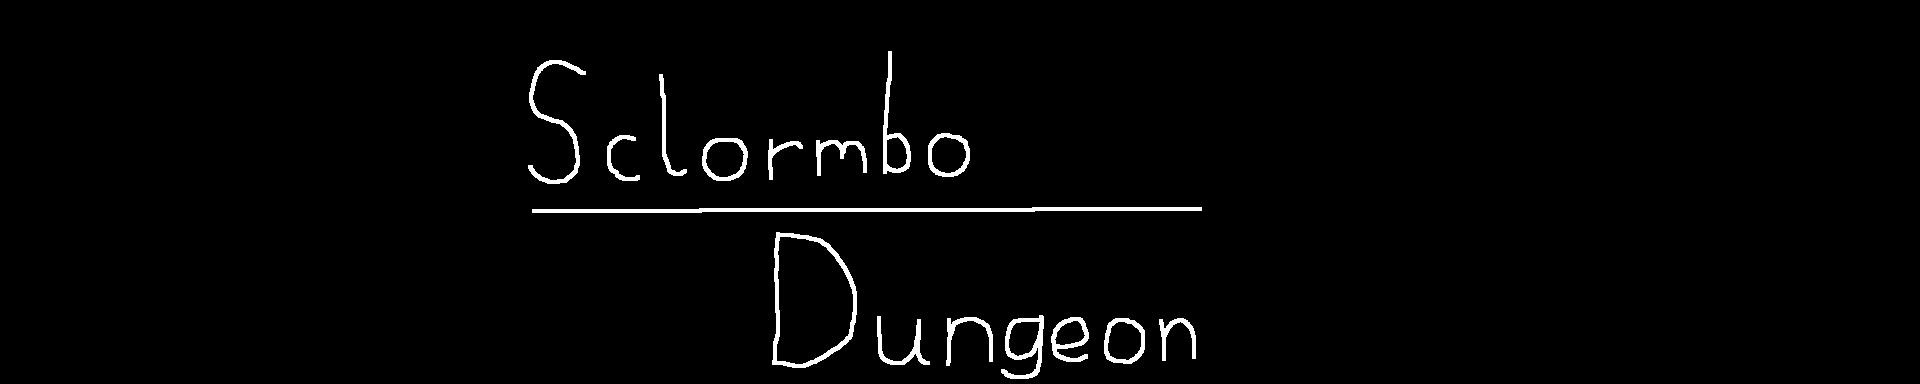 Sclormbo Dungeon